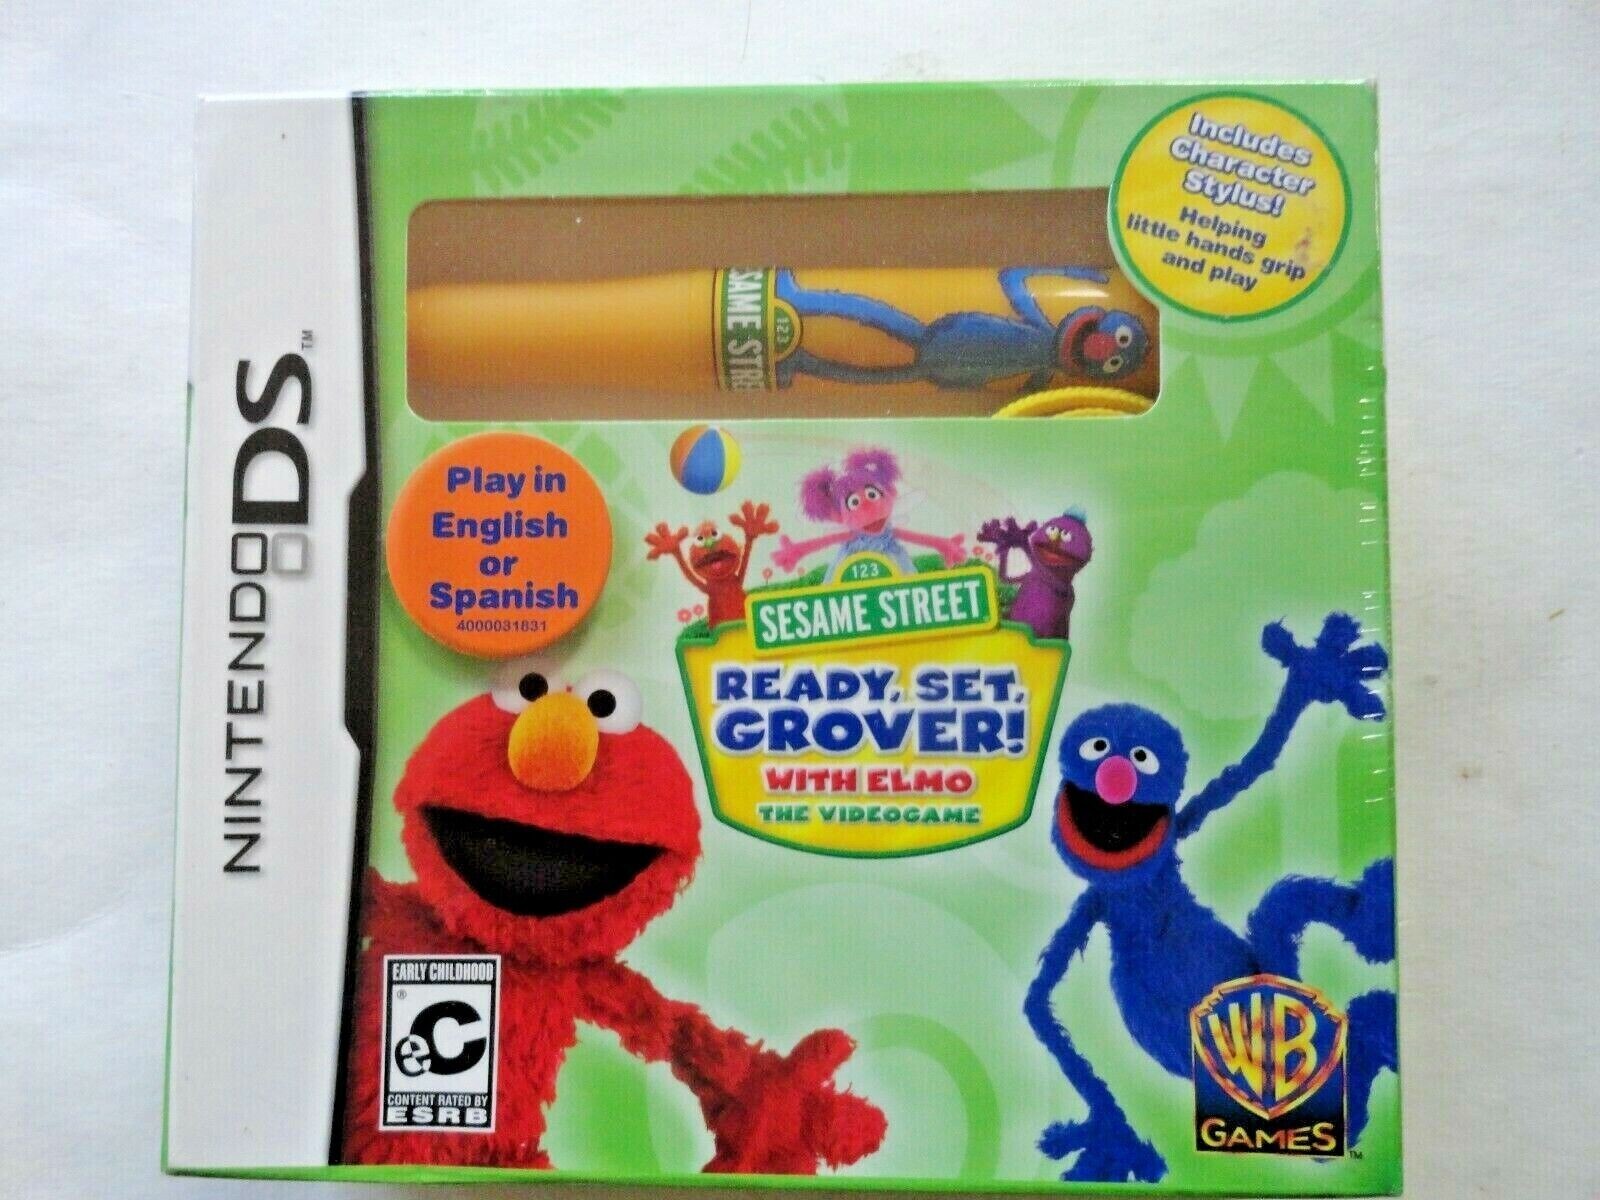  Warner Bros Games DS Ready, Set, Grover! Stylus